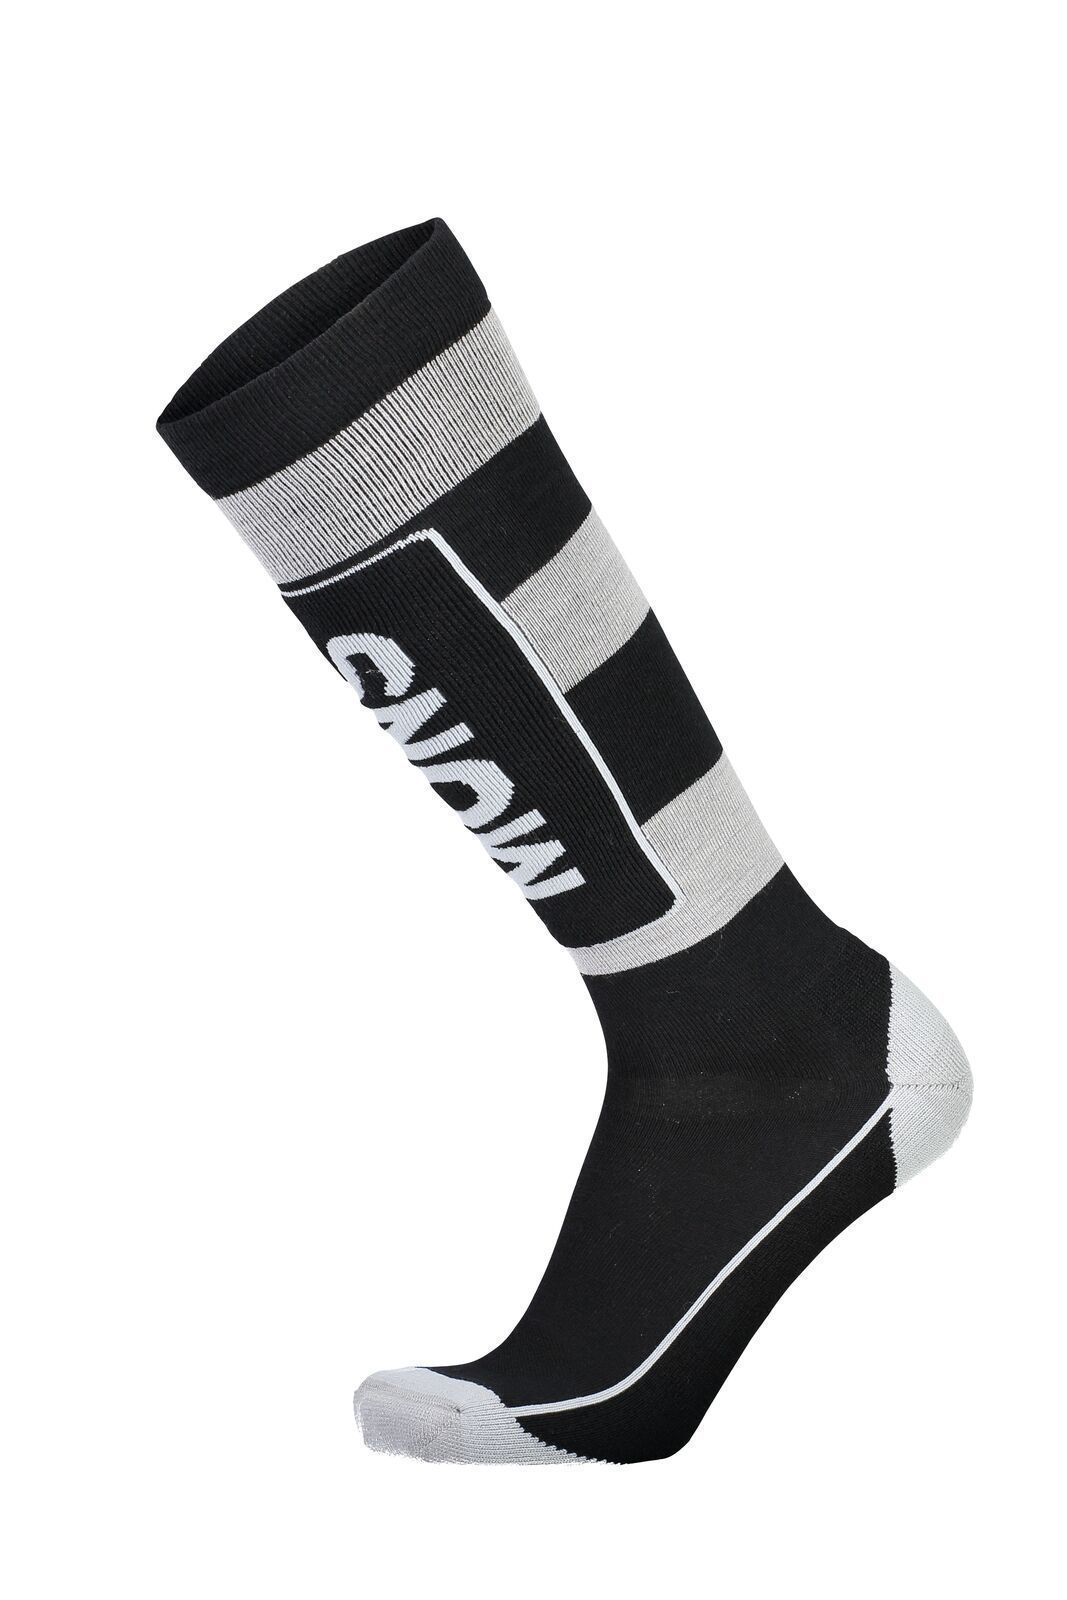 Mons Royale Men's Mons Tech Cushion Sock - Merino Wool, Black/Grey / S (39-41)